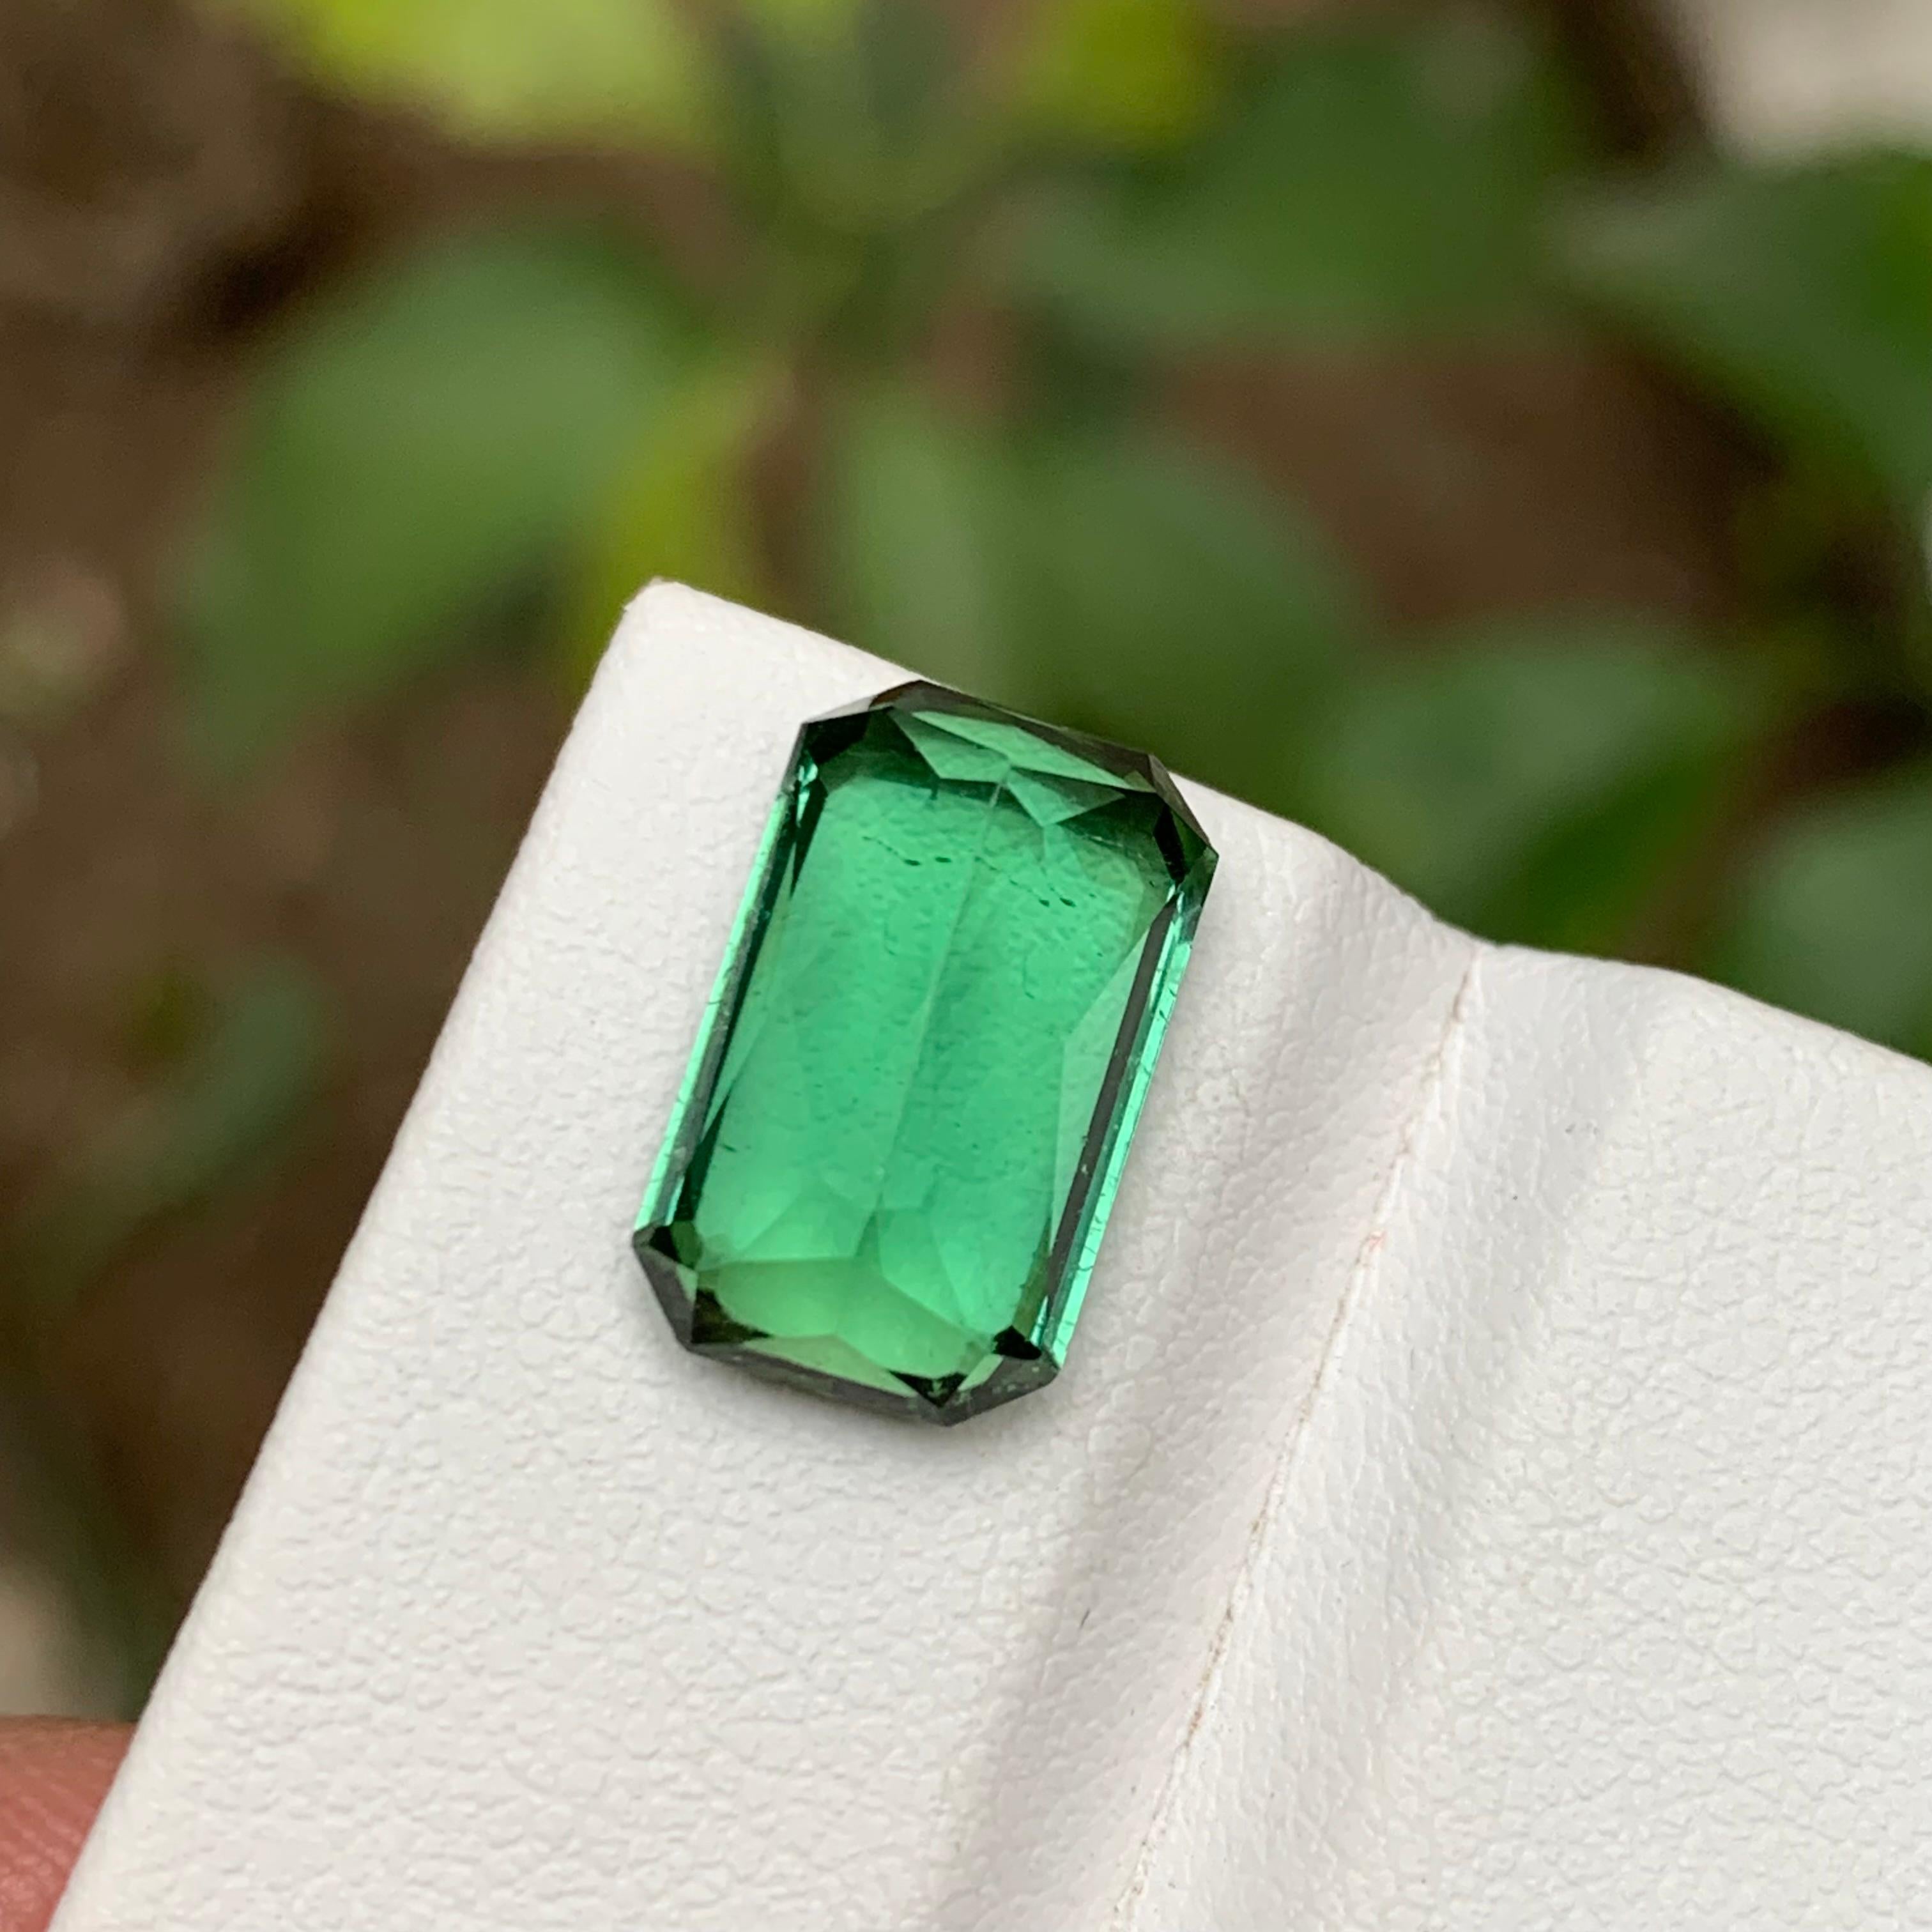 Brilliant Cut Rare Bluish Green Natural Tourmaline Gemstone 5.65 Ct Brilliant Cushion for Ring